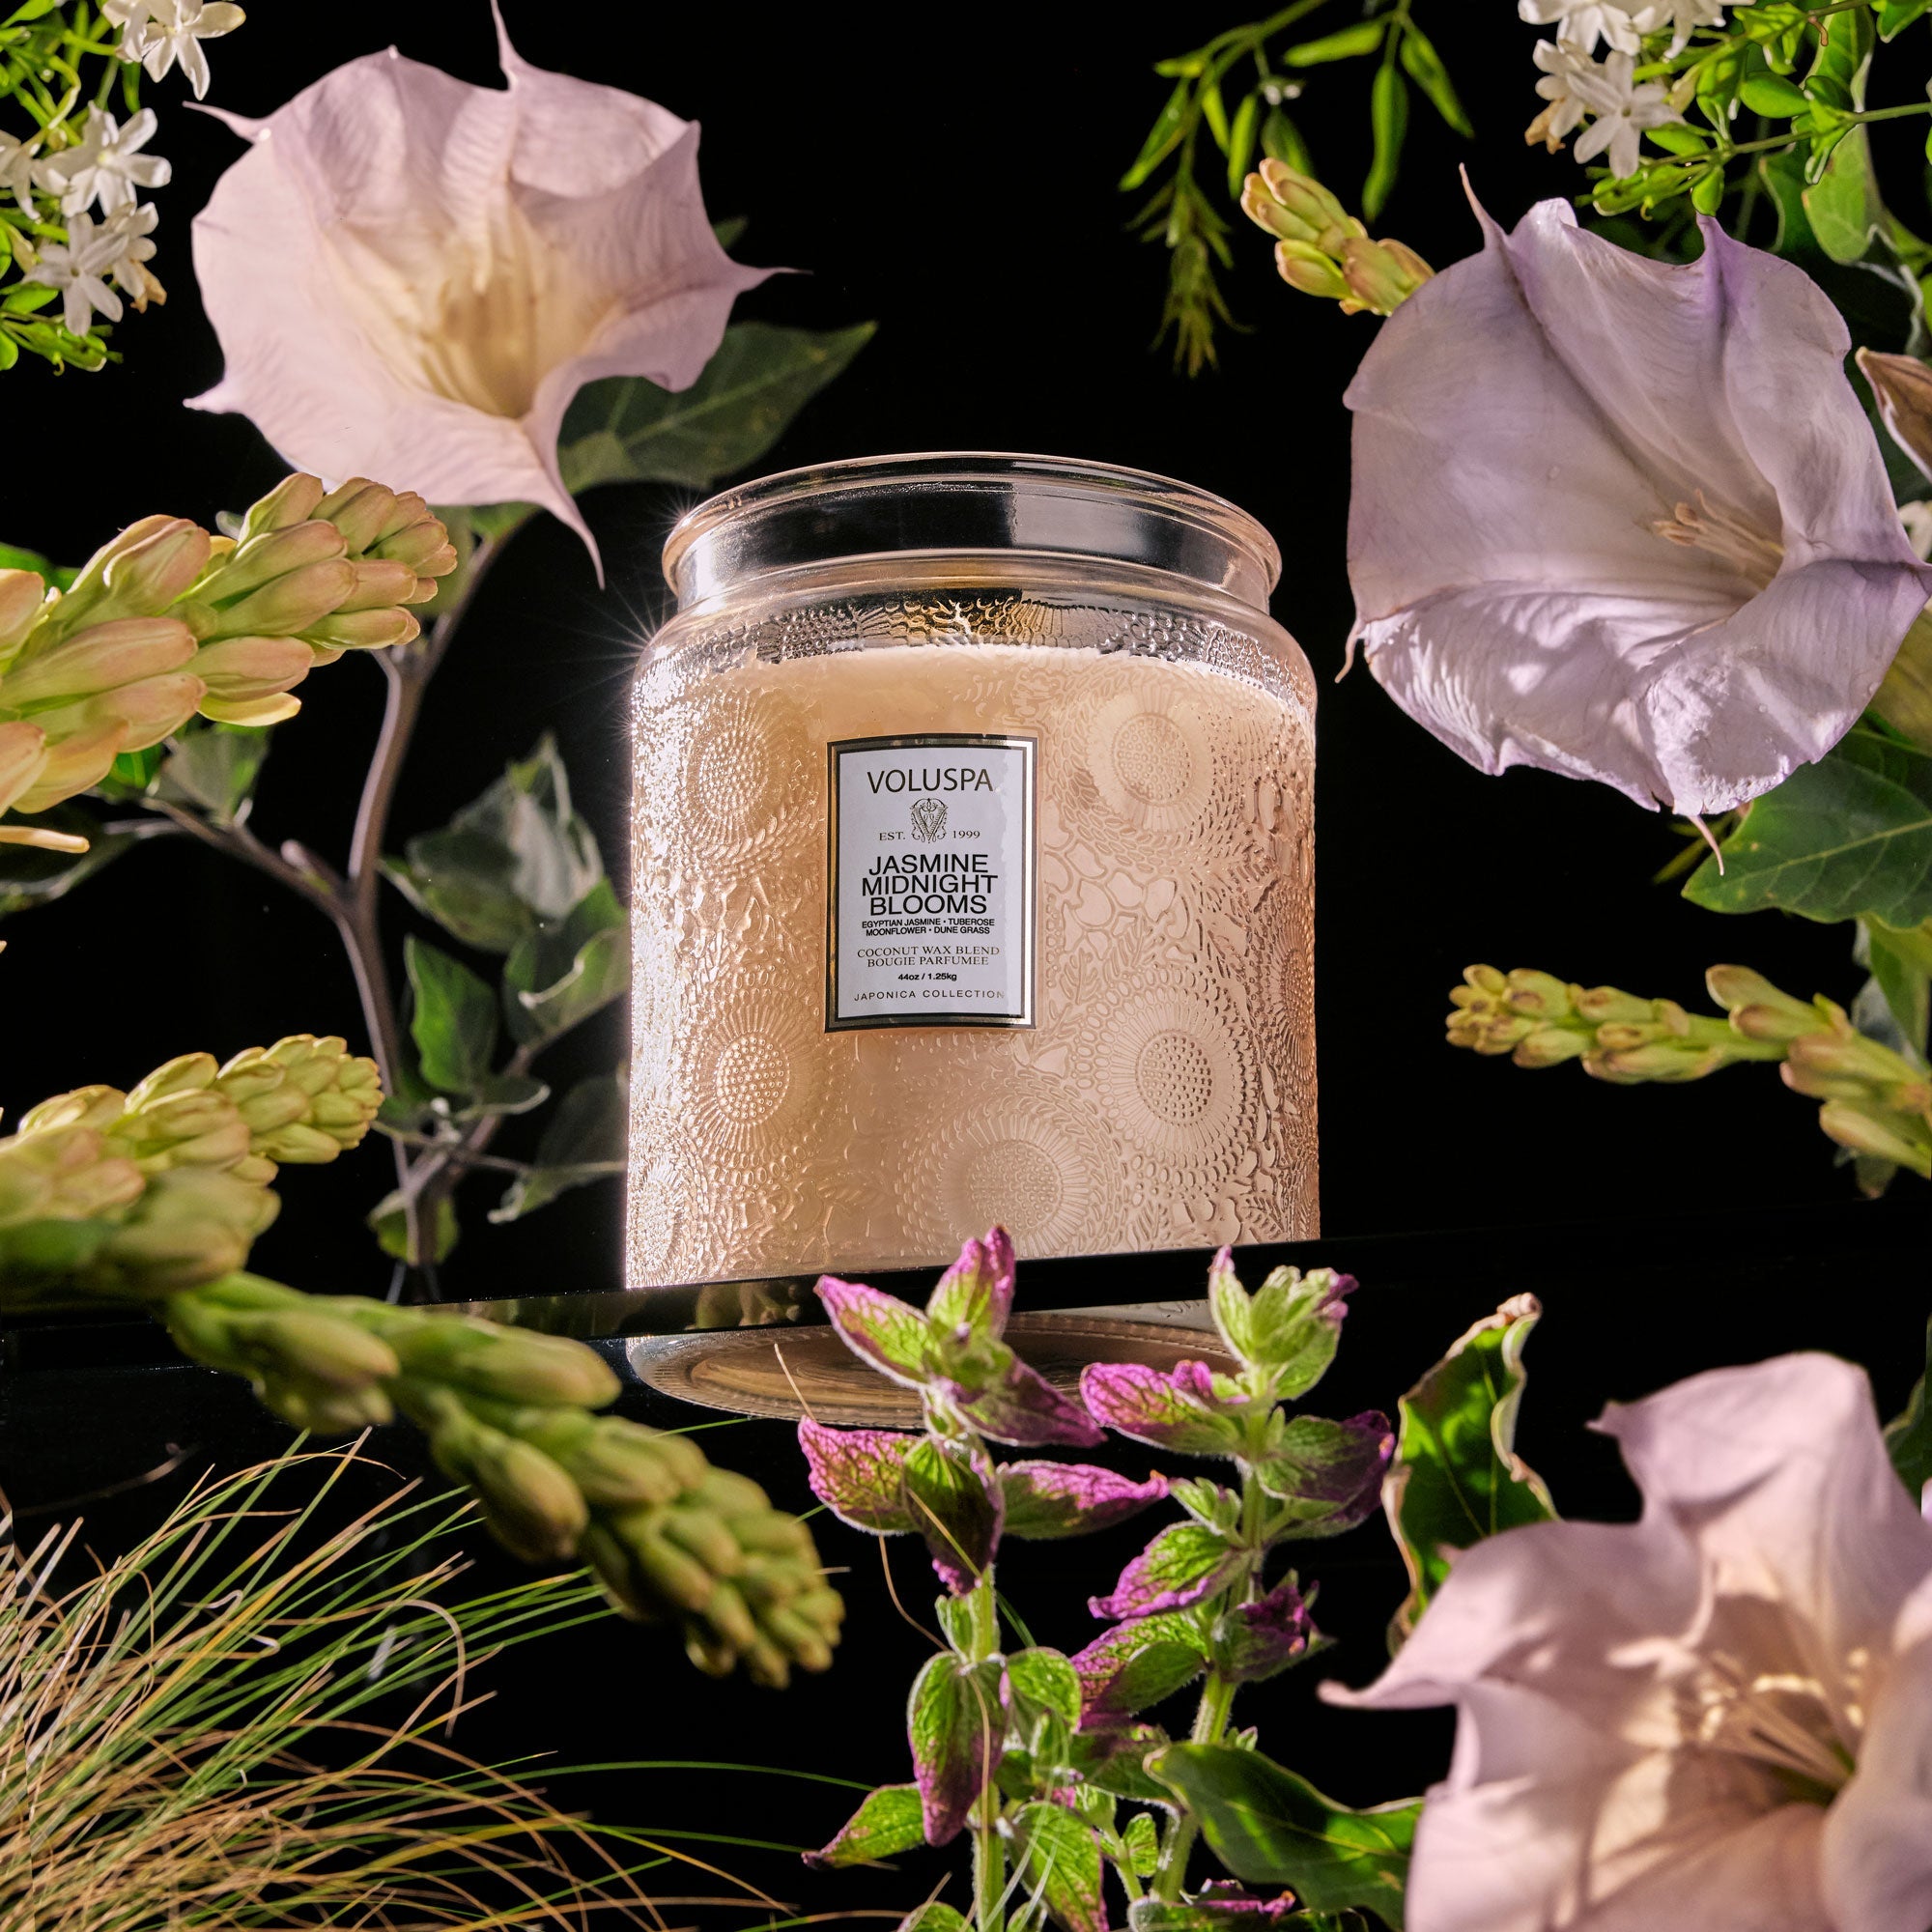 Jasmine Midnight Blooms - Luxe Jar Candle